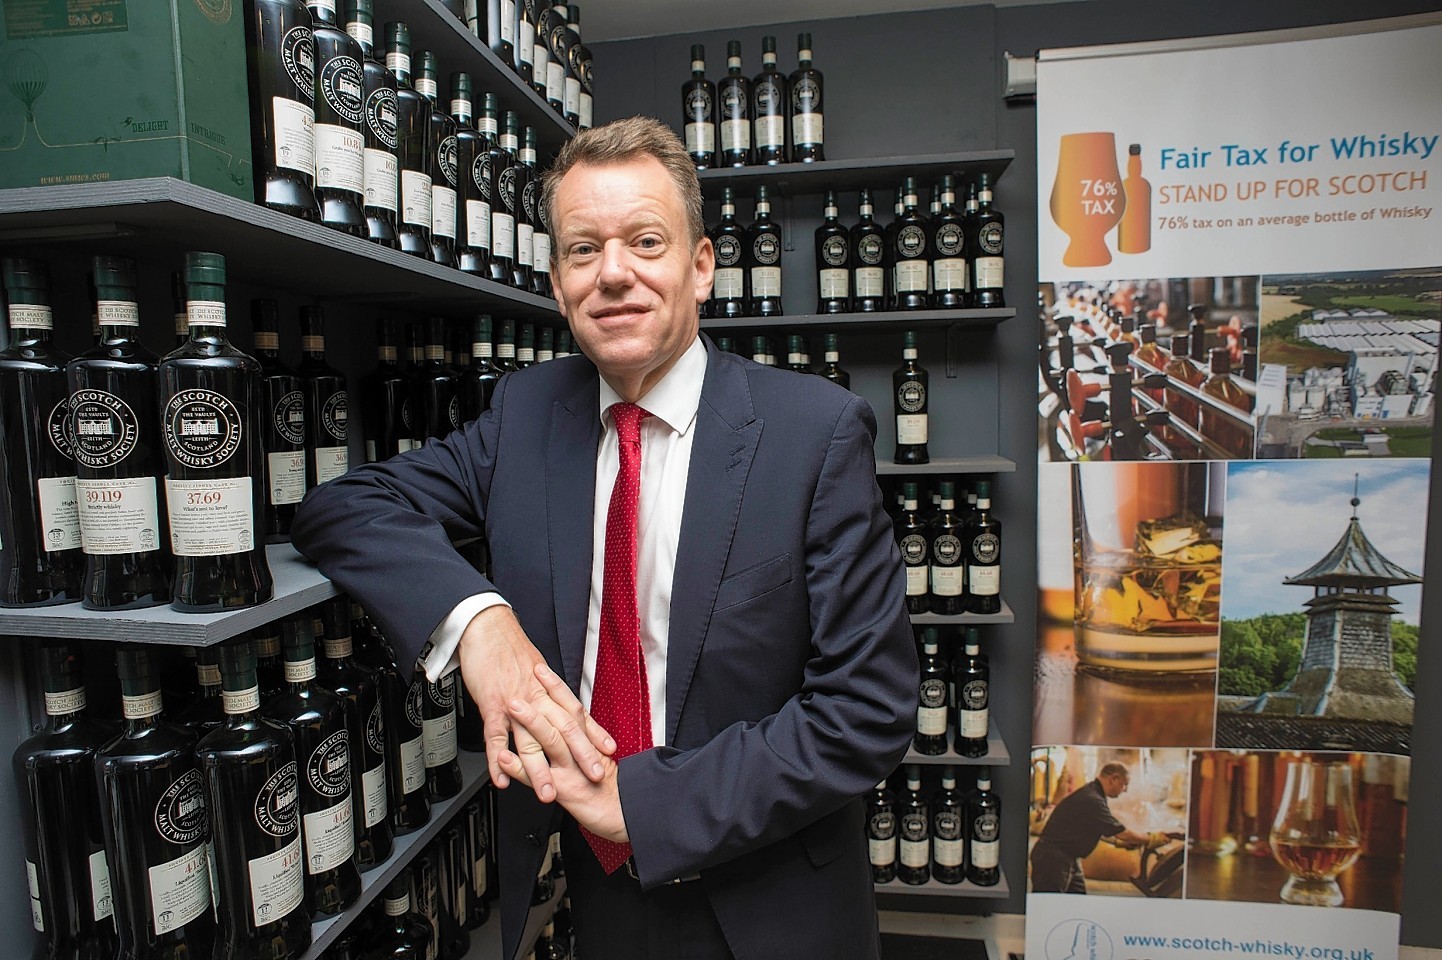 CEO of The Scotch Whisky Association, David Frost